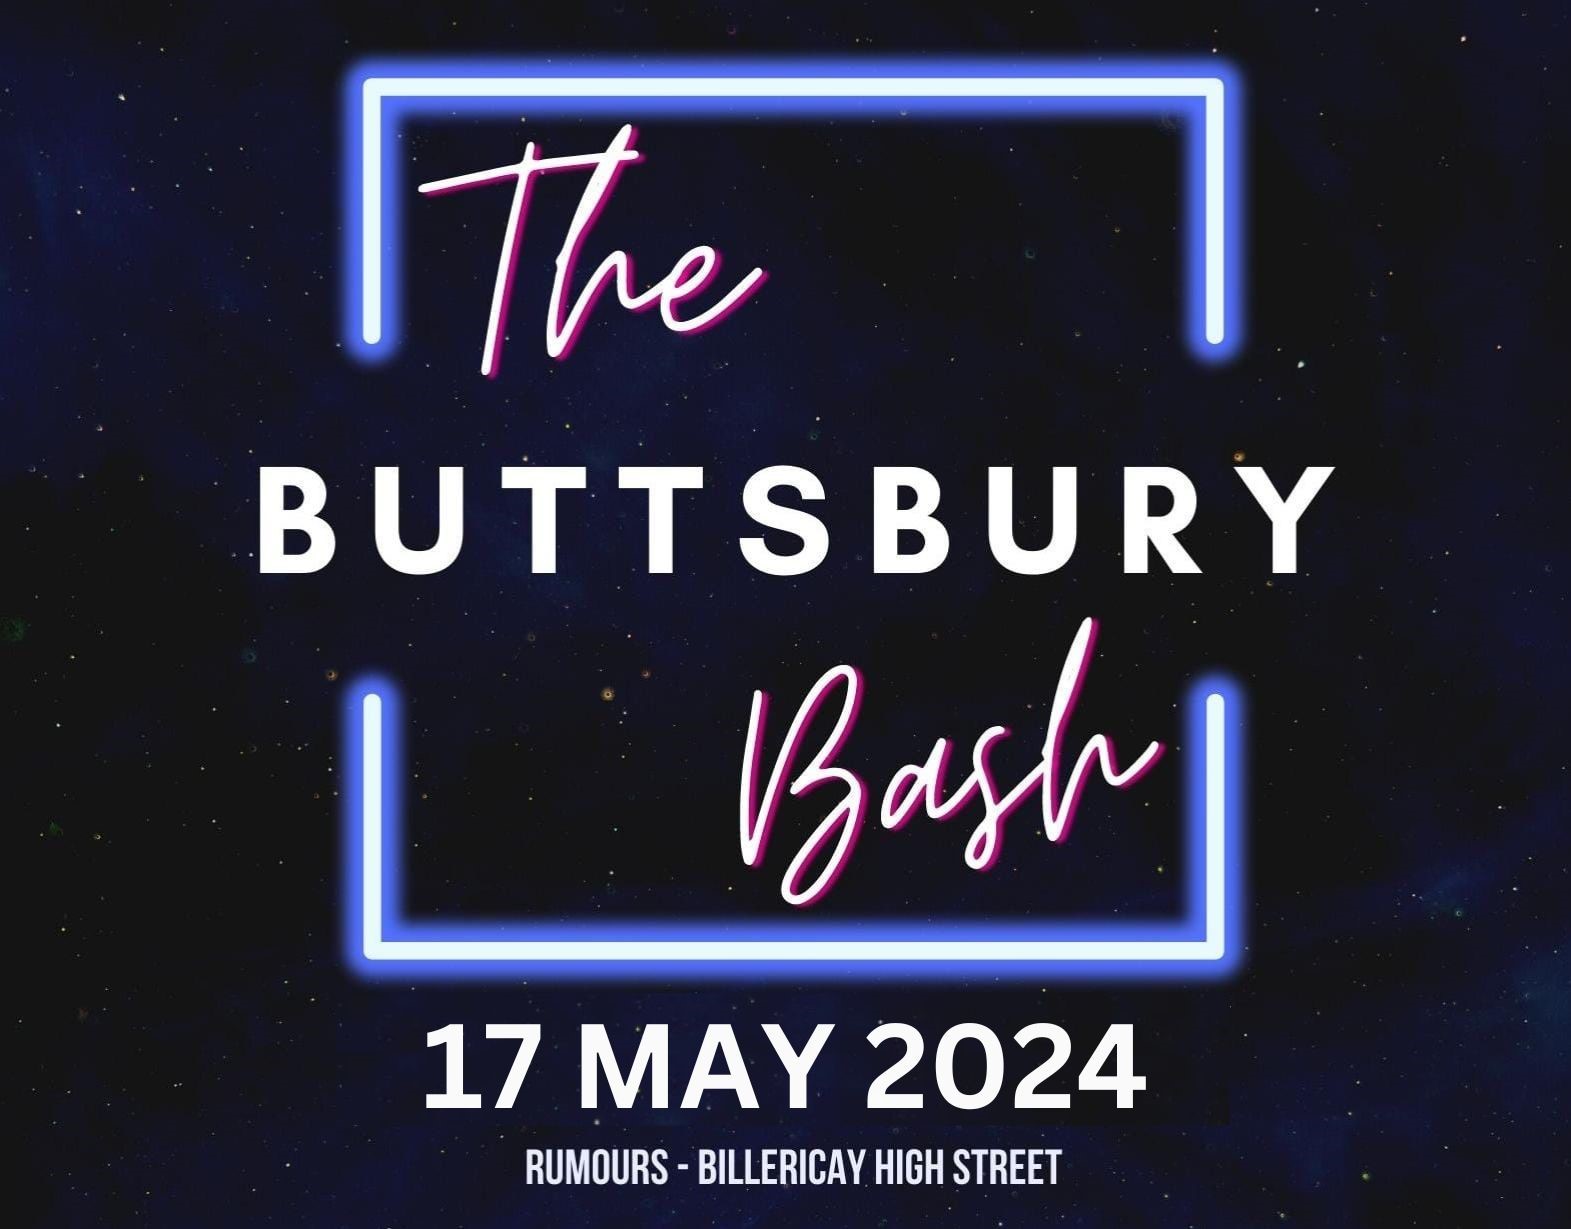 The Buttsbury Bash